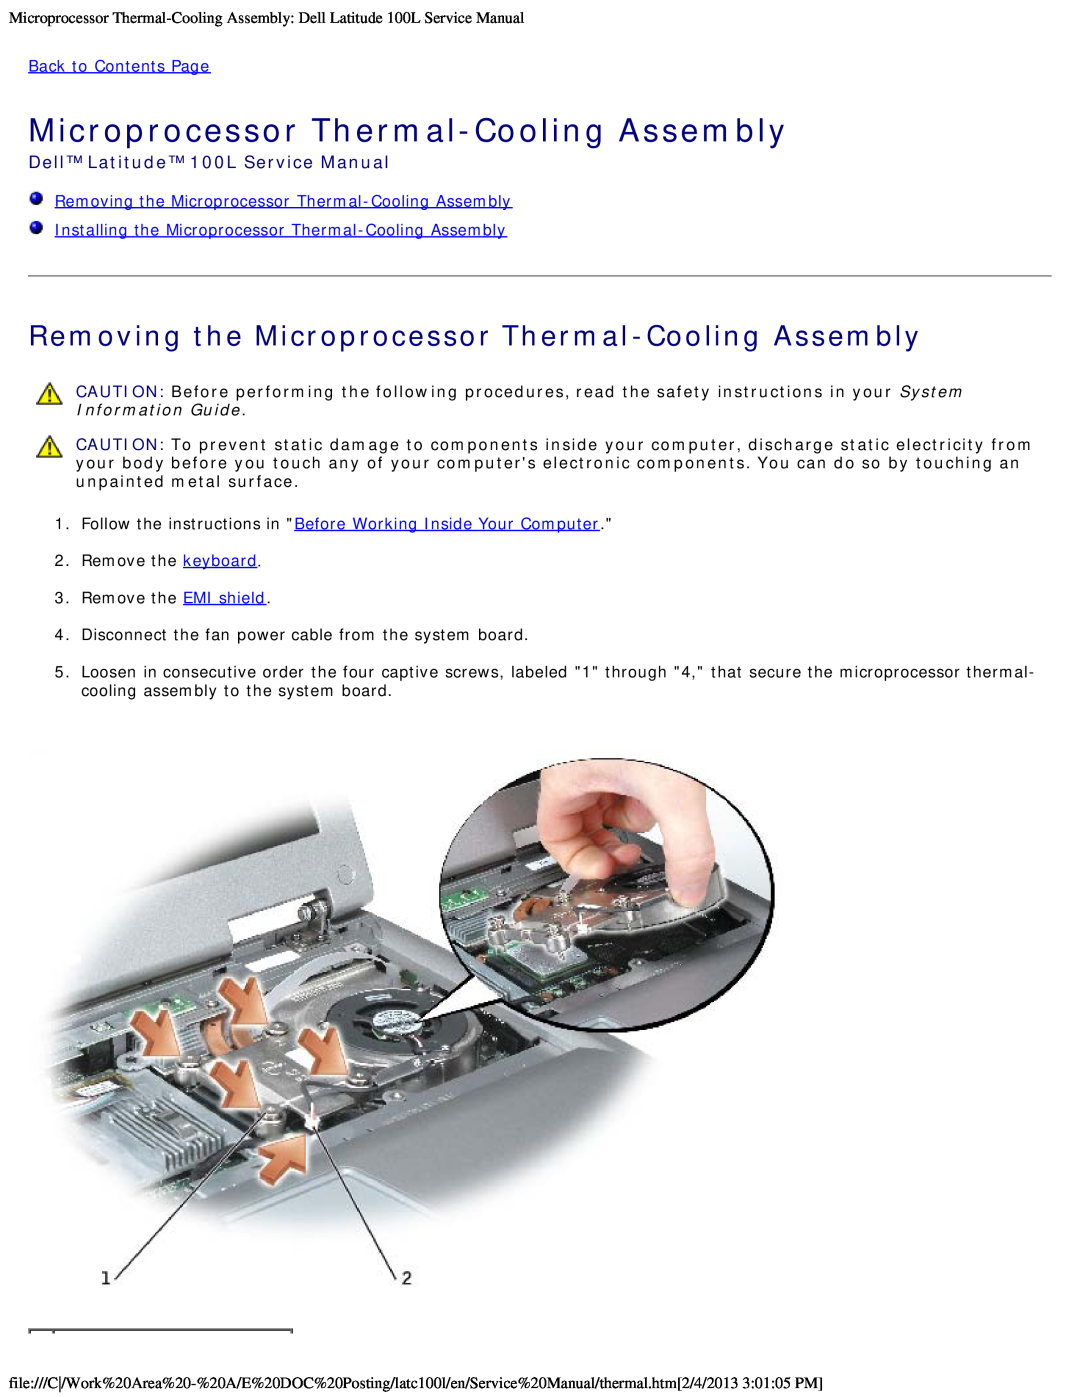 Dell 100L Removing the Microprocessor Thermal-Cooling Assembly, Installing the Microprocessor Thermal-Cooling Assembly 